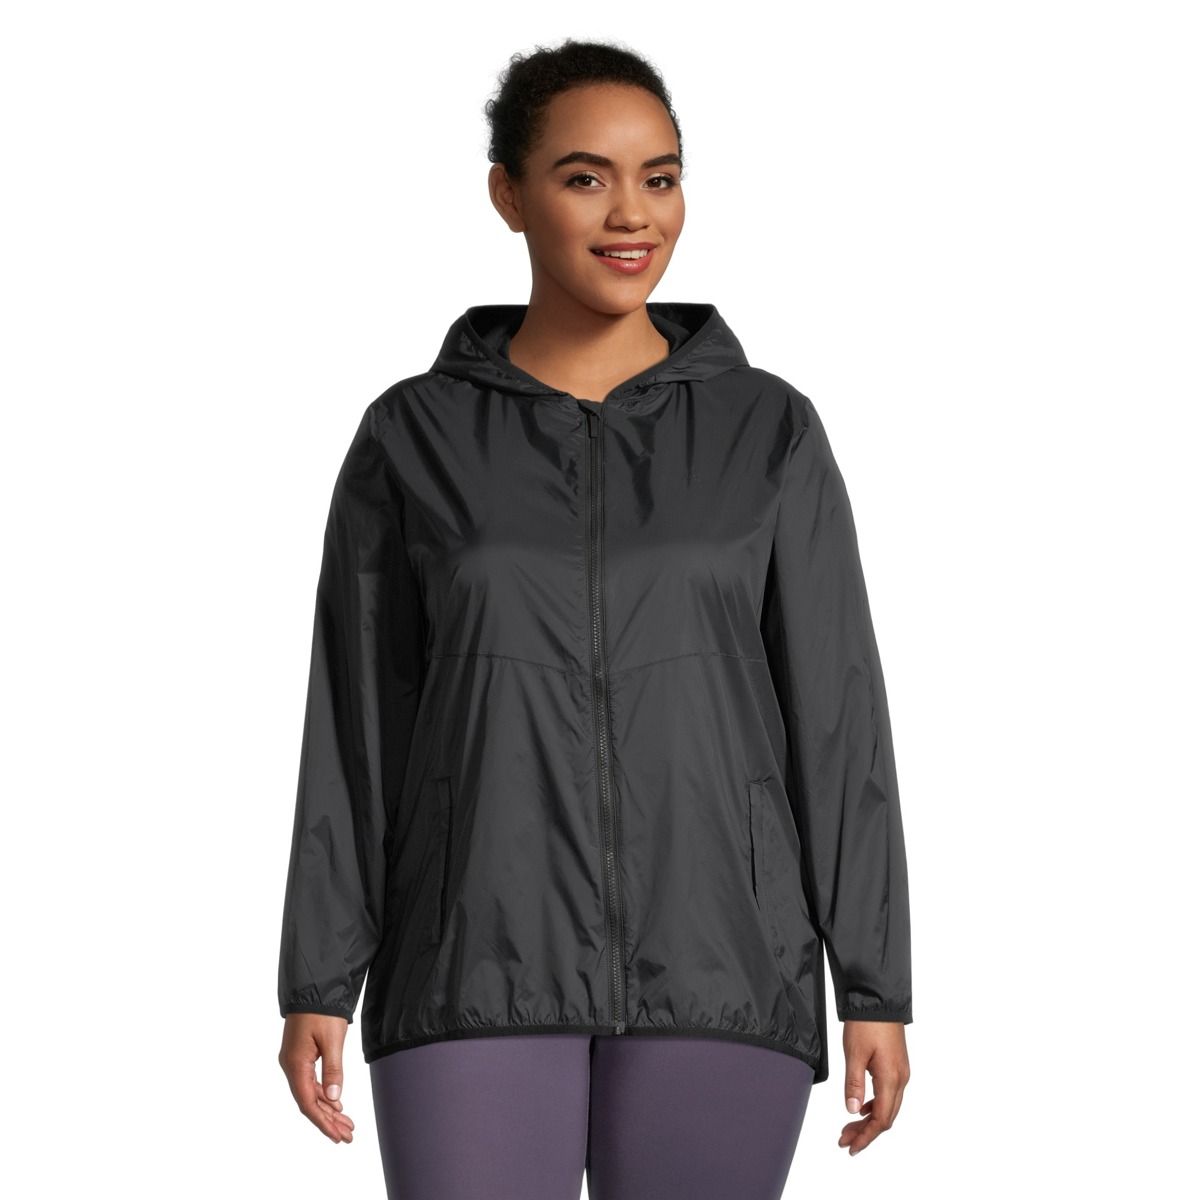 Ripzone Women's Plus Size Wind Jacket, Packable, Water-Resistant ...